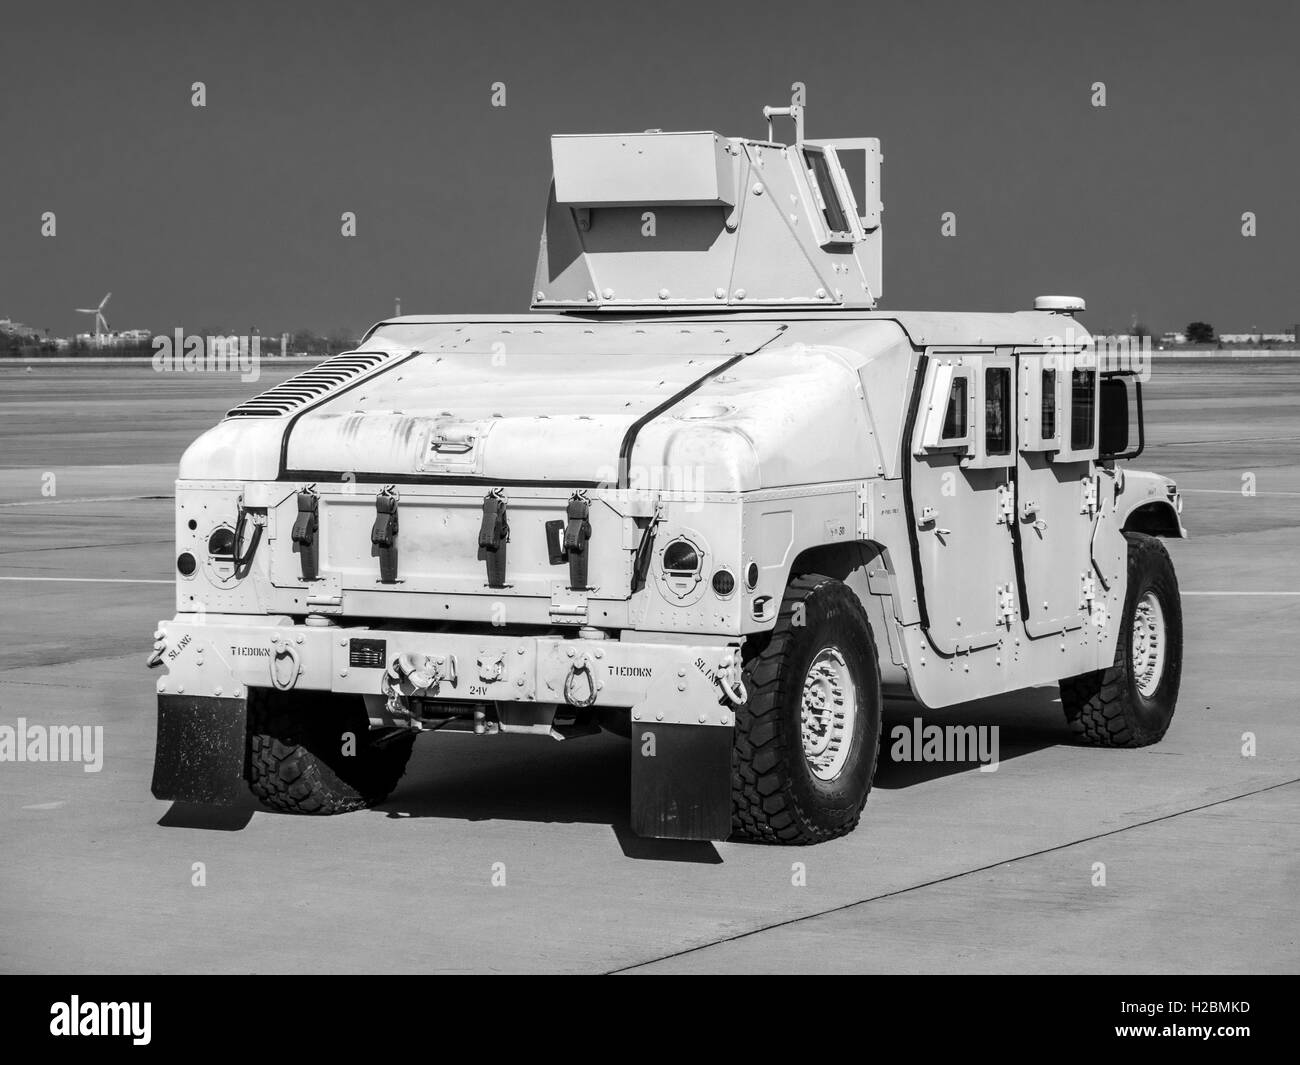 American veicolo blindato HMMWV (Humvee) Foto Stock